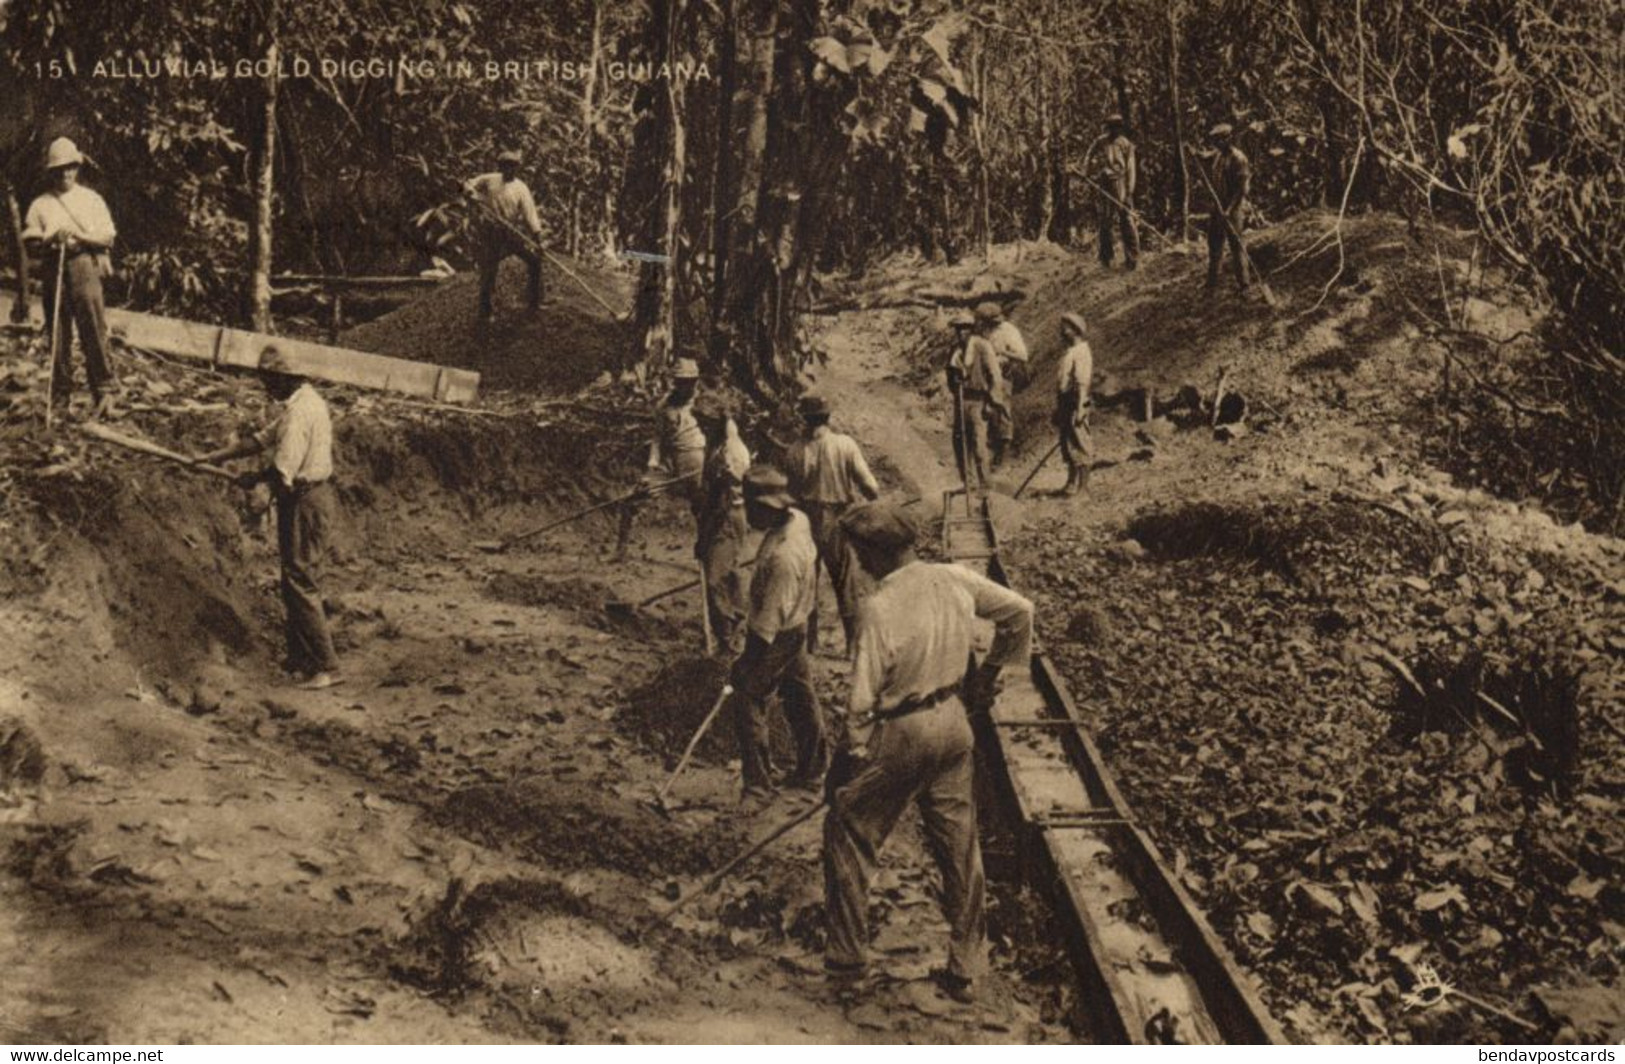 British Guiana, Guyana, Demerara, Alluvial Gold Digging (1924) Tuck Postcard - Guyana (voorheen Brits Guyana)